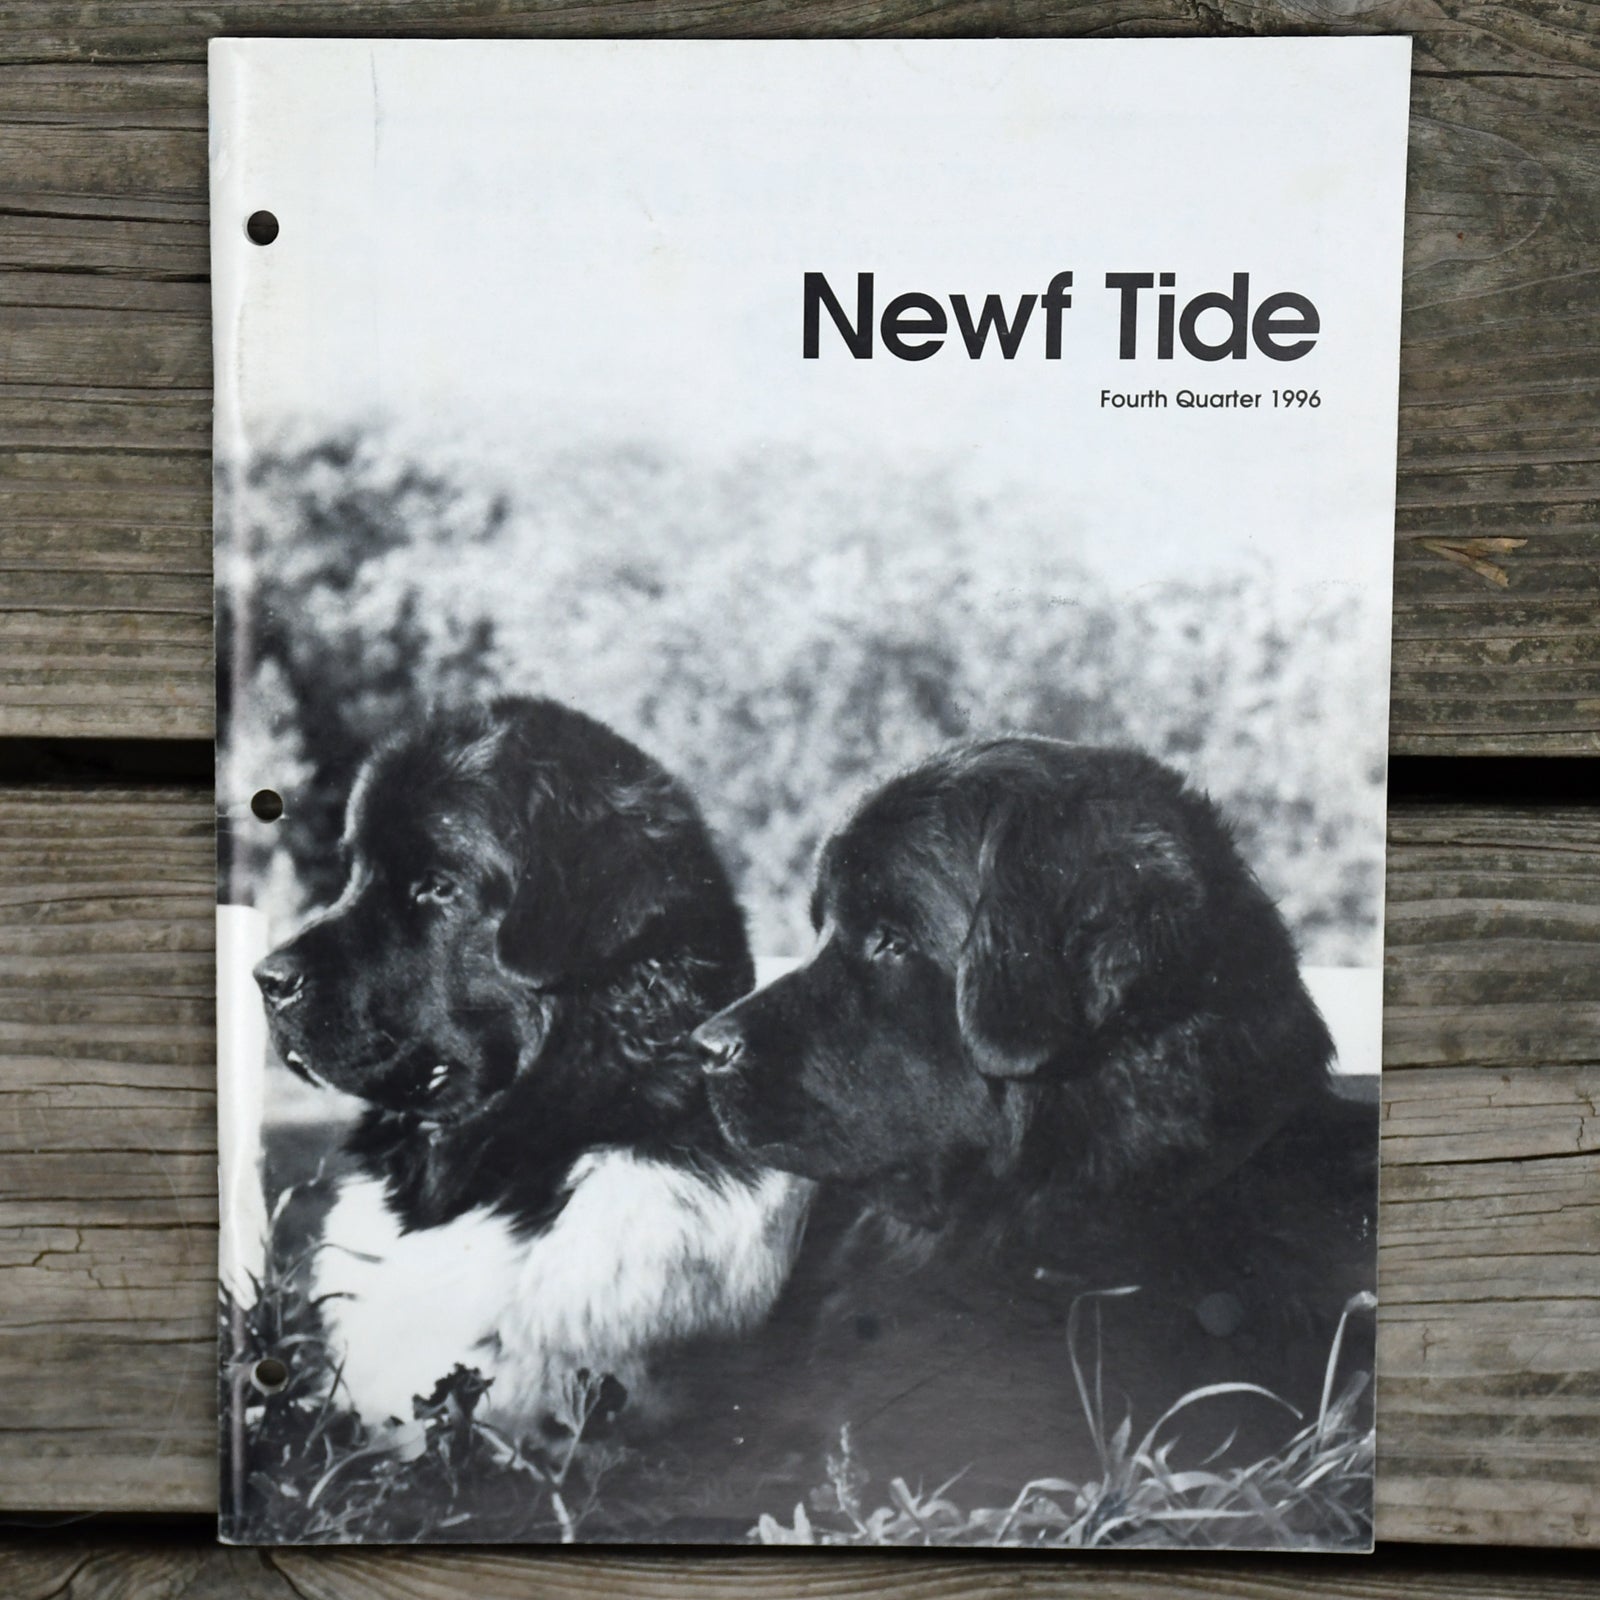 Newf Tide Fourth Quarter 1996